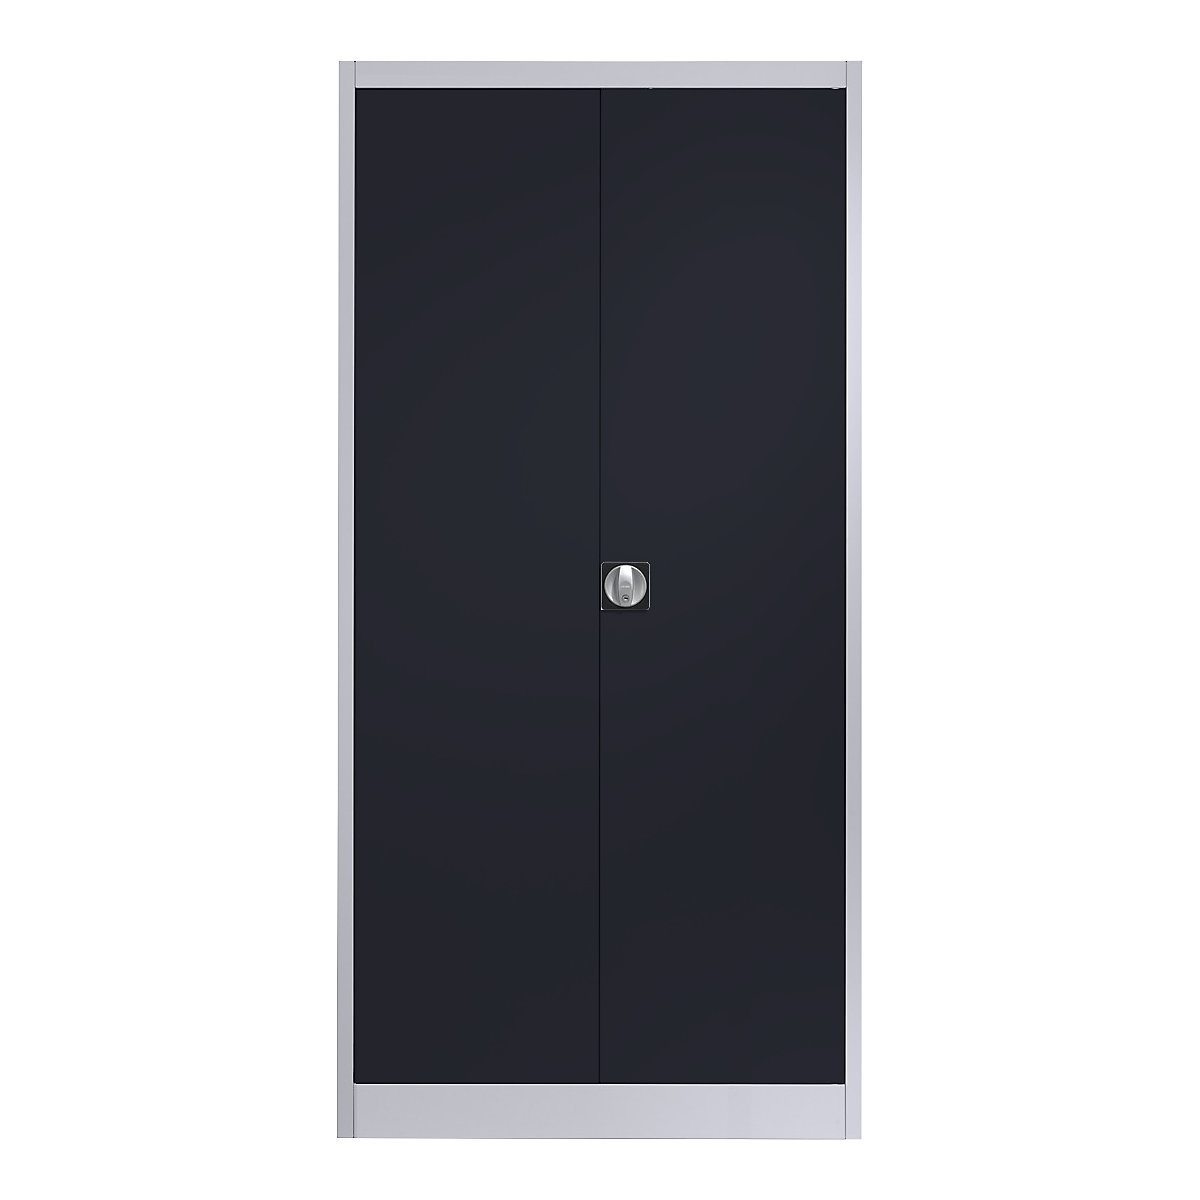 Jeklena omara s krilnimi vrati – mauser, 4 police, globina 600 mm, belo aluminijast / antracitno siv-6